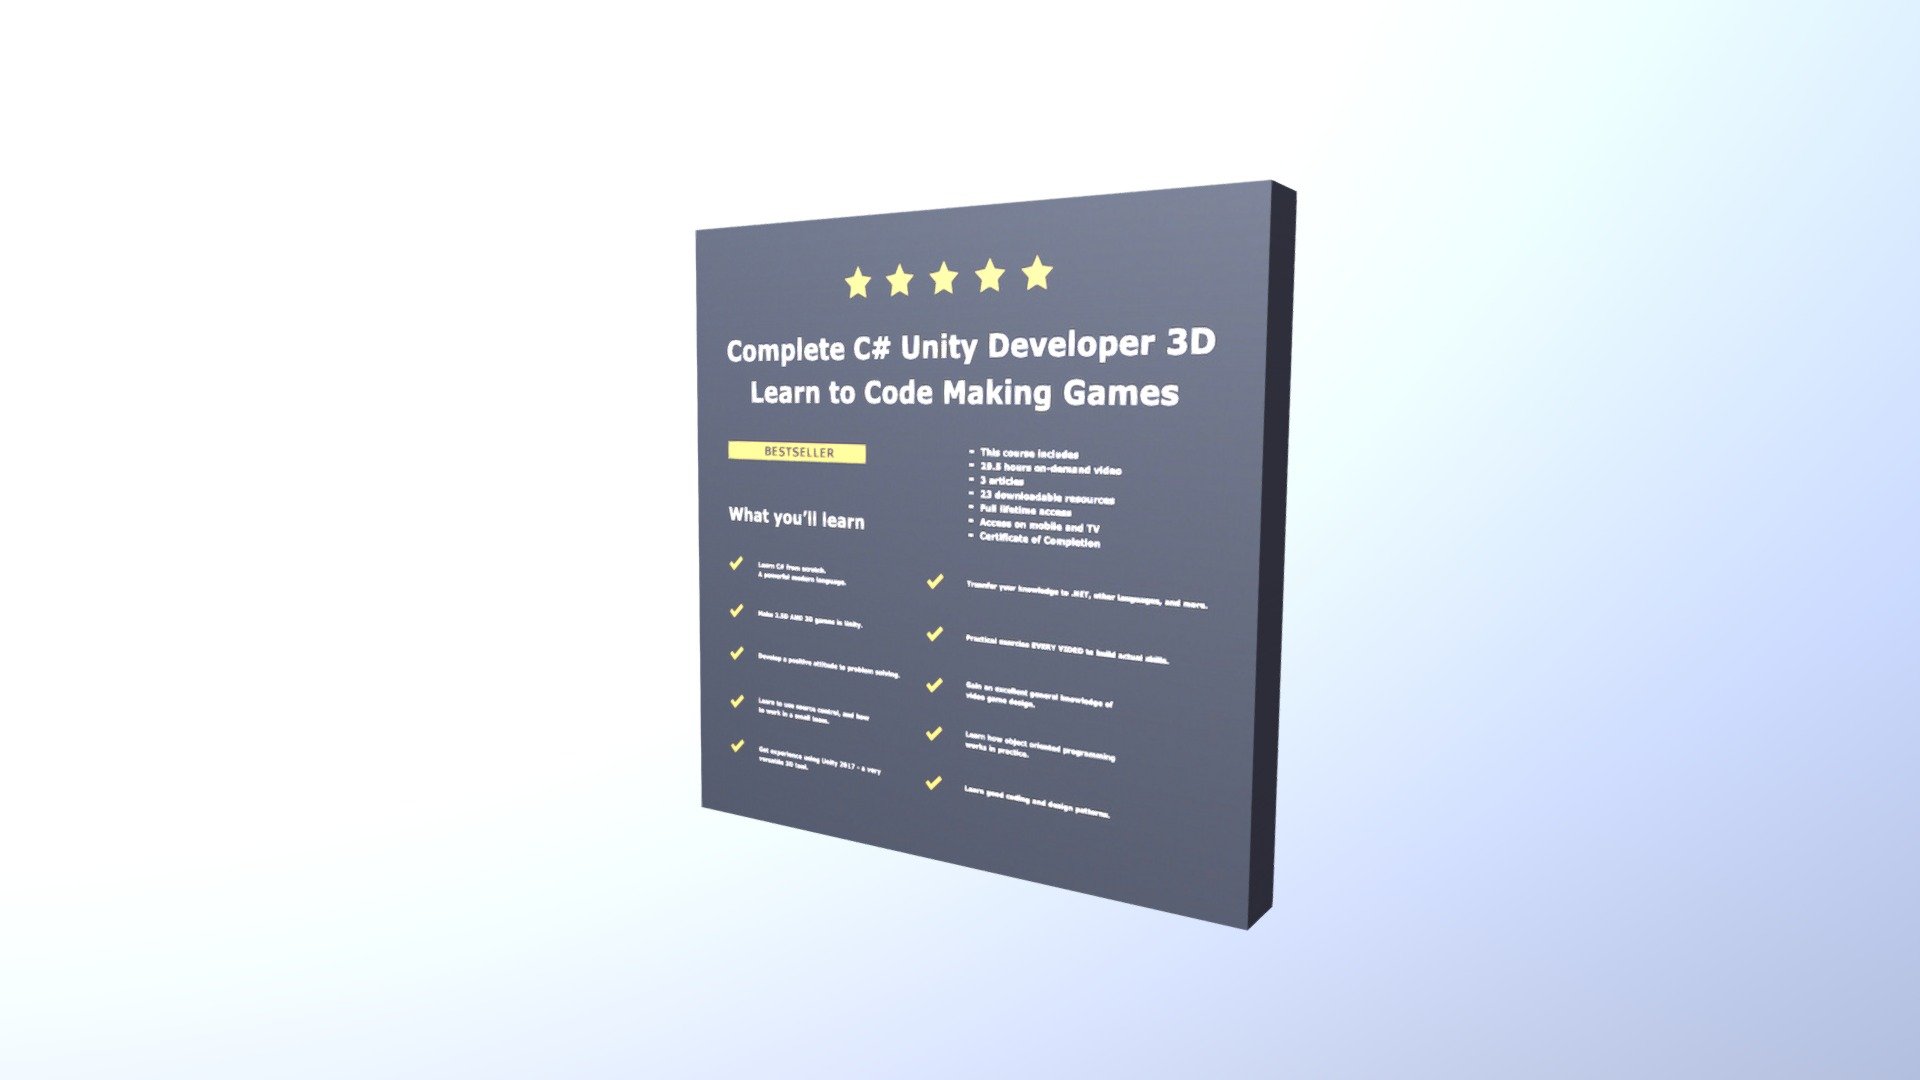 Complete C# Unity Developer 3D Certificate